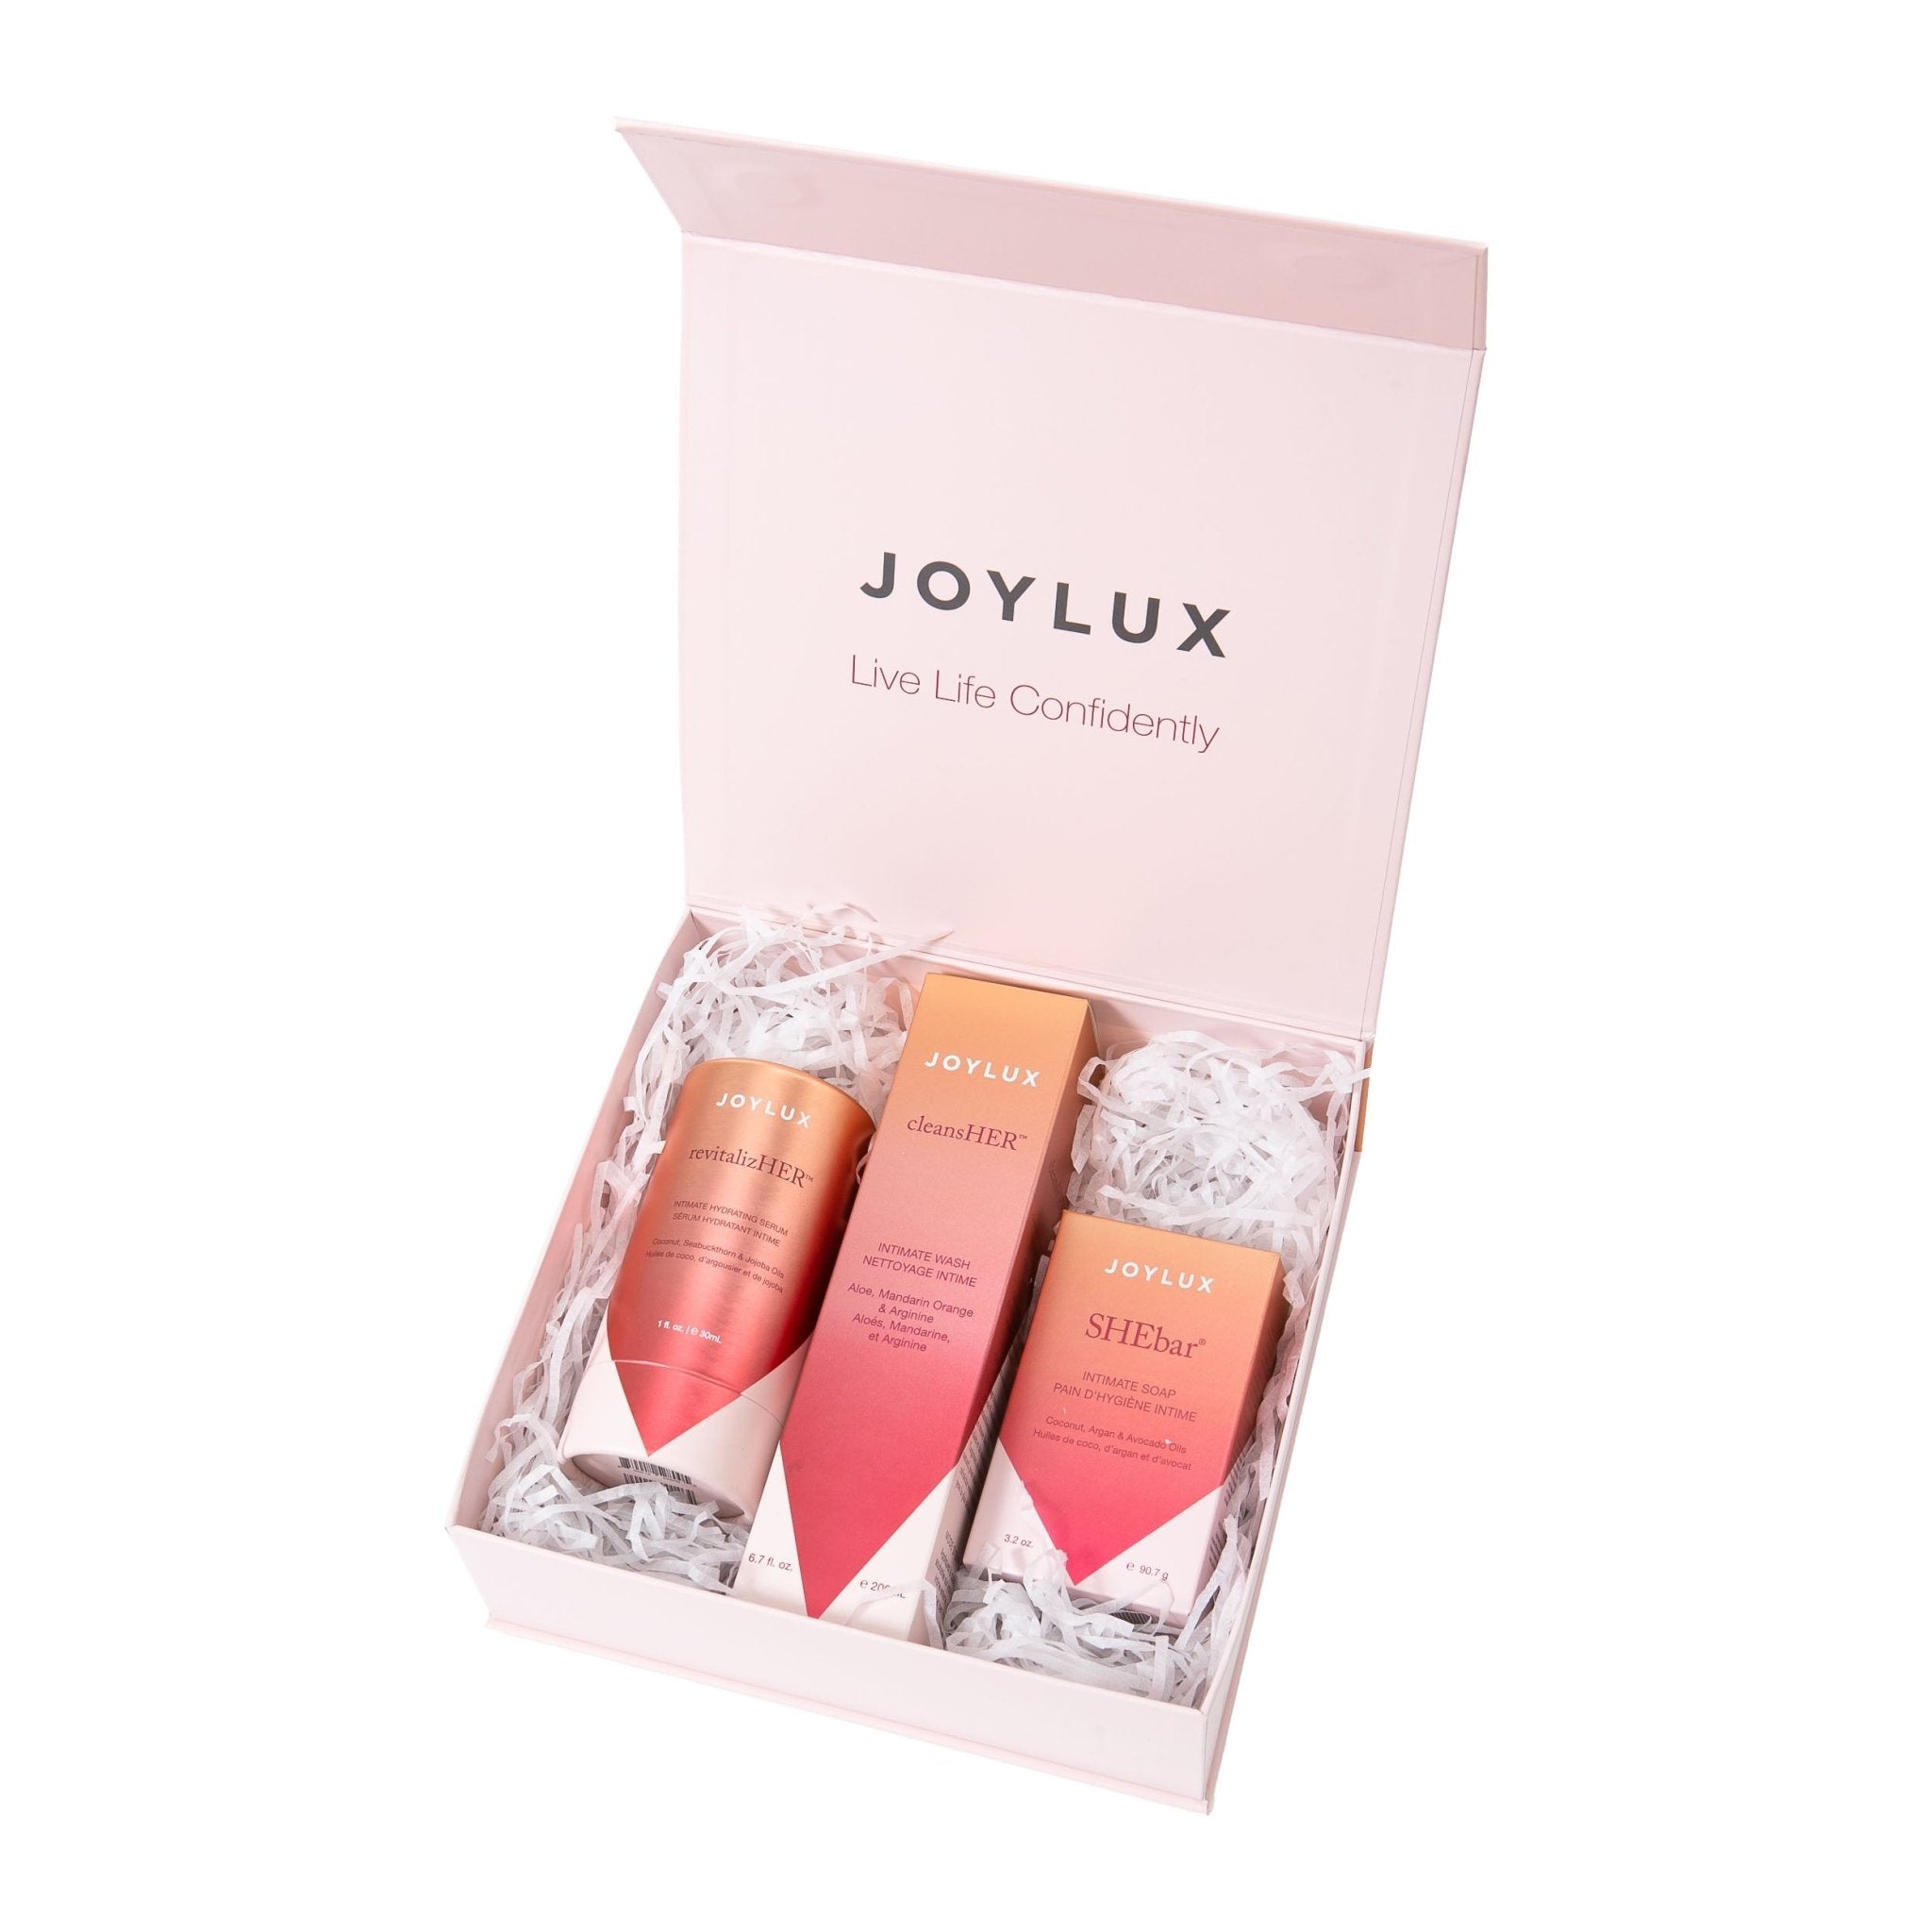 HER Gift Set - Joylux